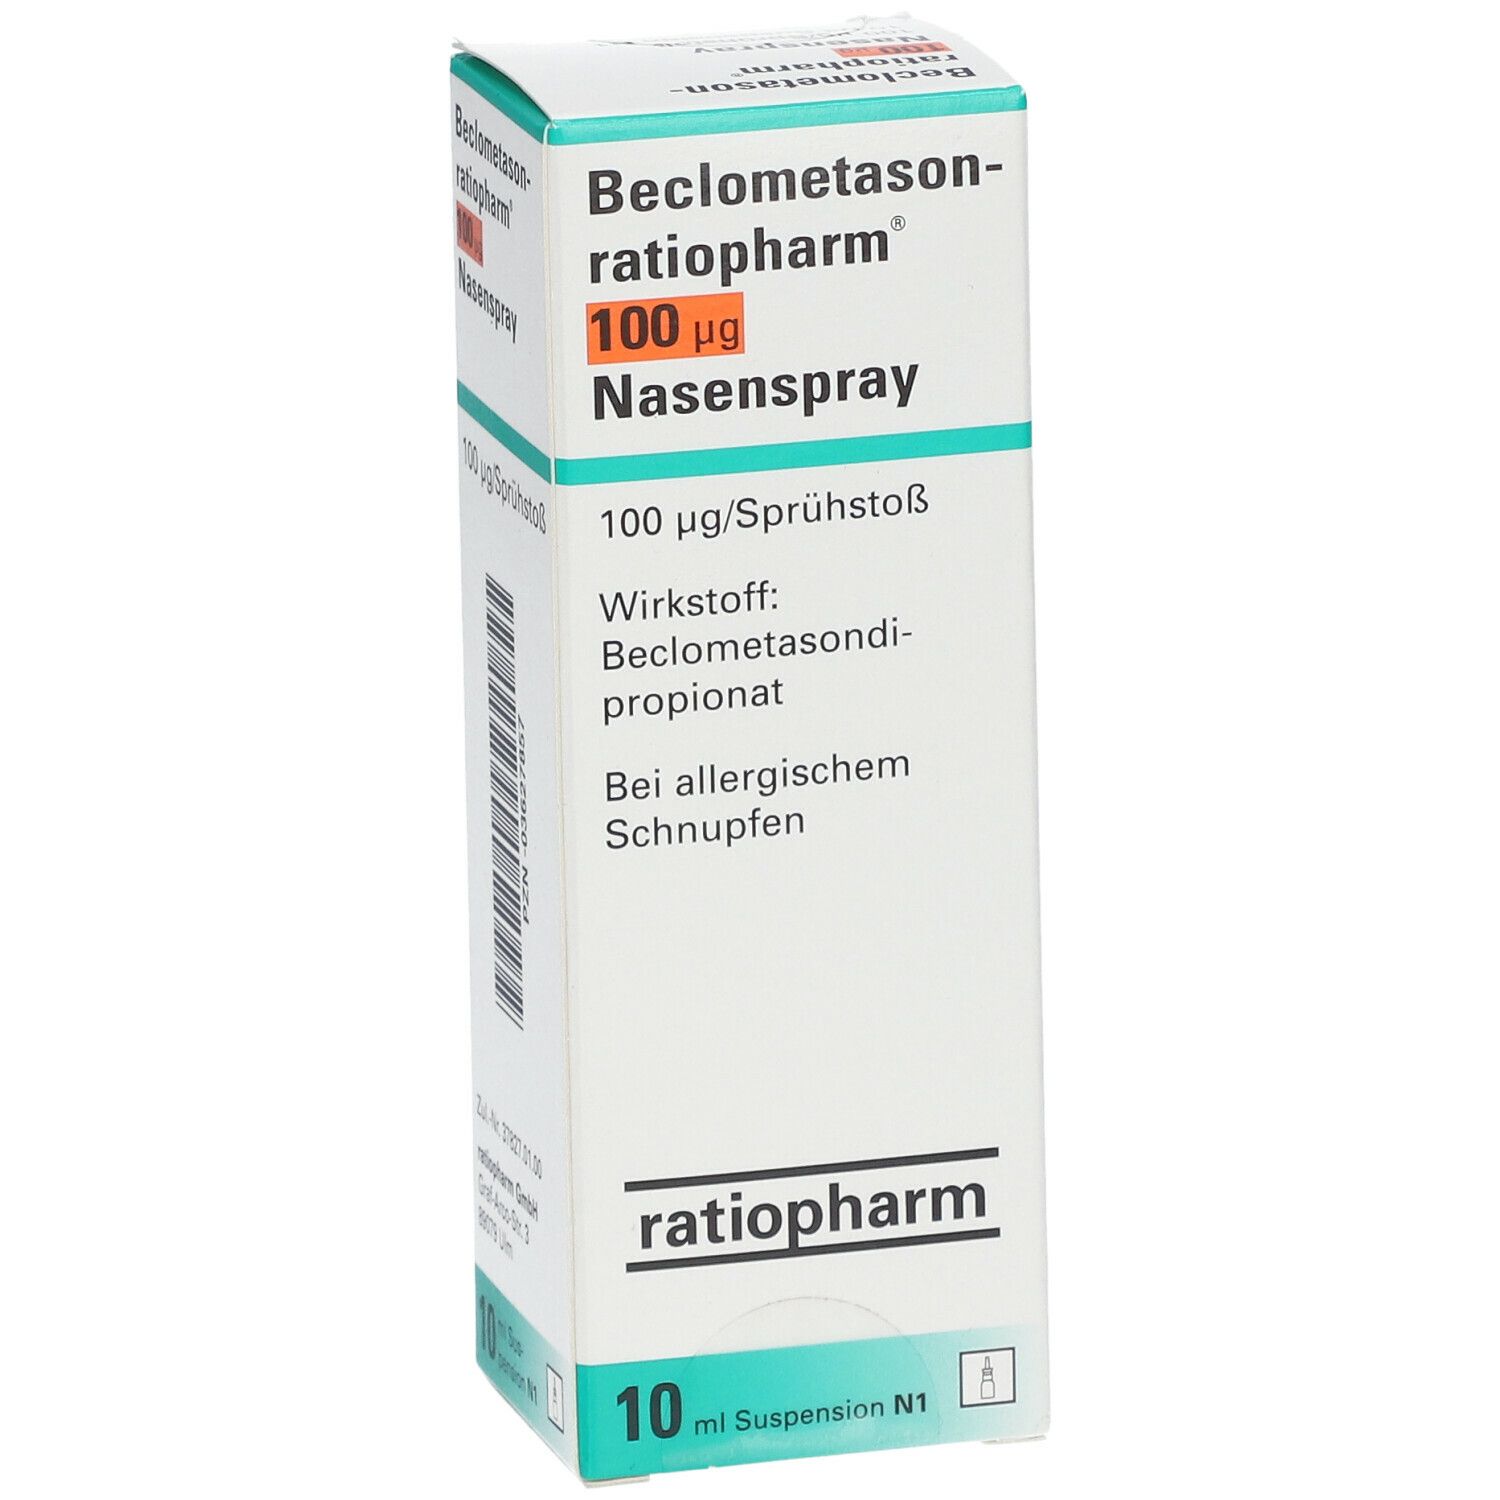 Beclometason-ratiopharm® 100 μg